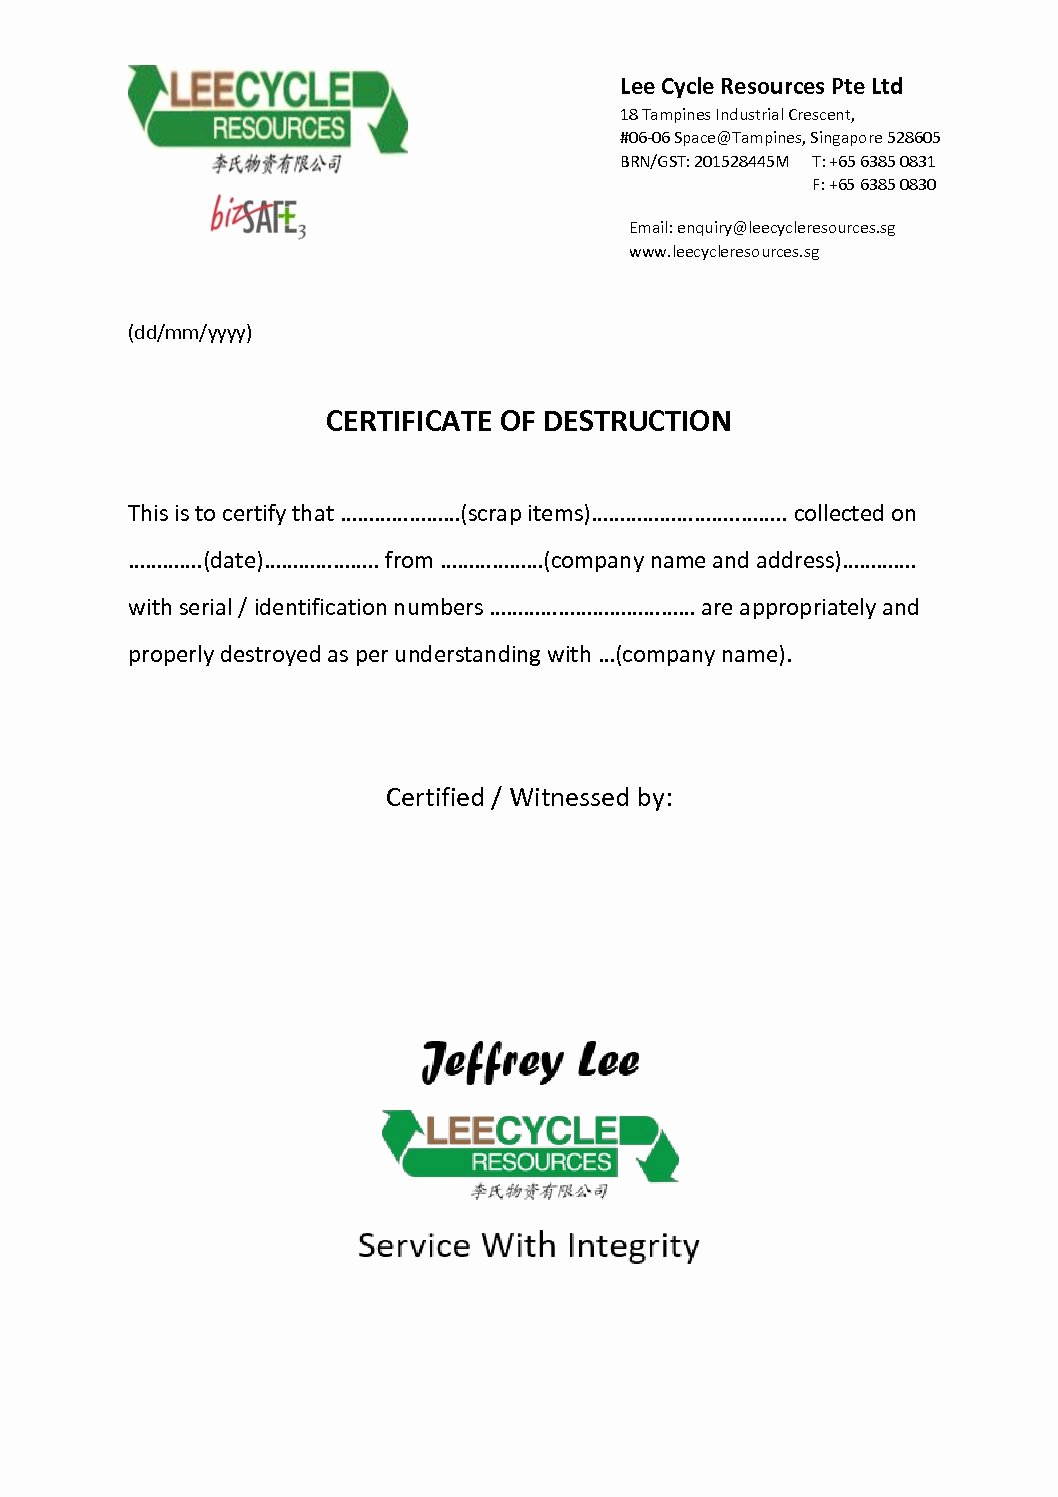 Certificate Of Destruction Template Best Of Certificate Destruction Leecycle Resources Singapore